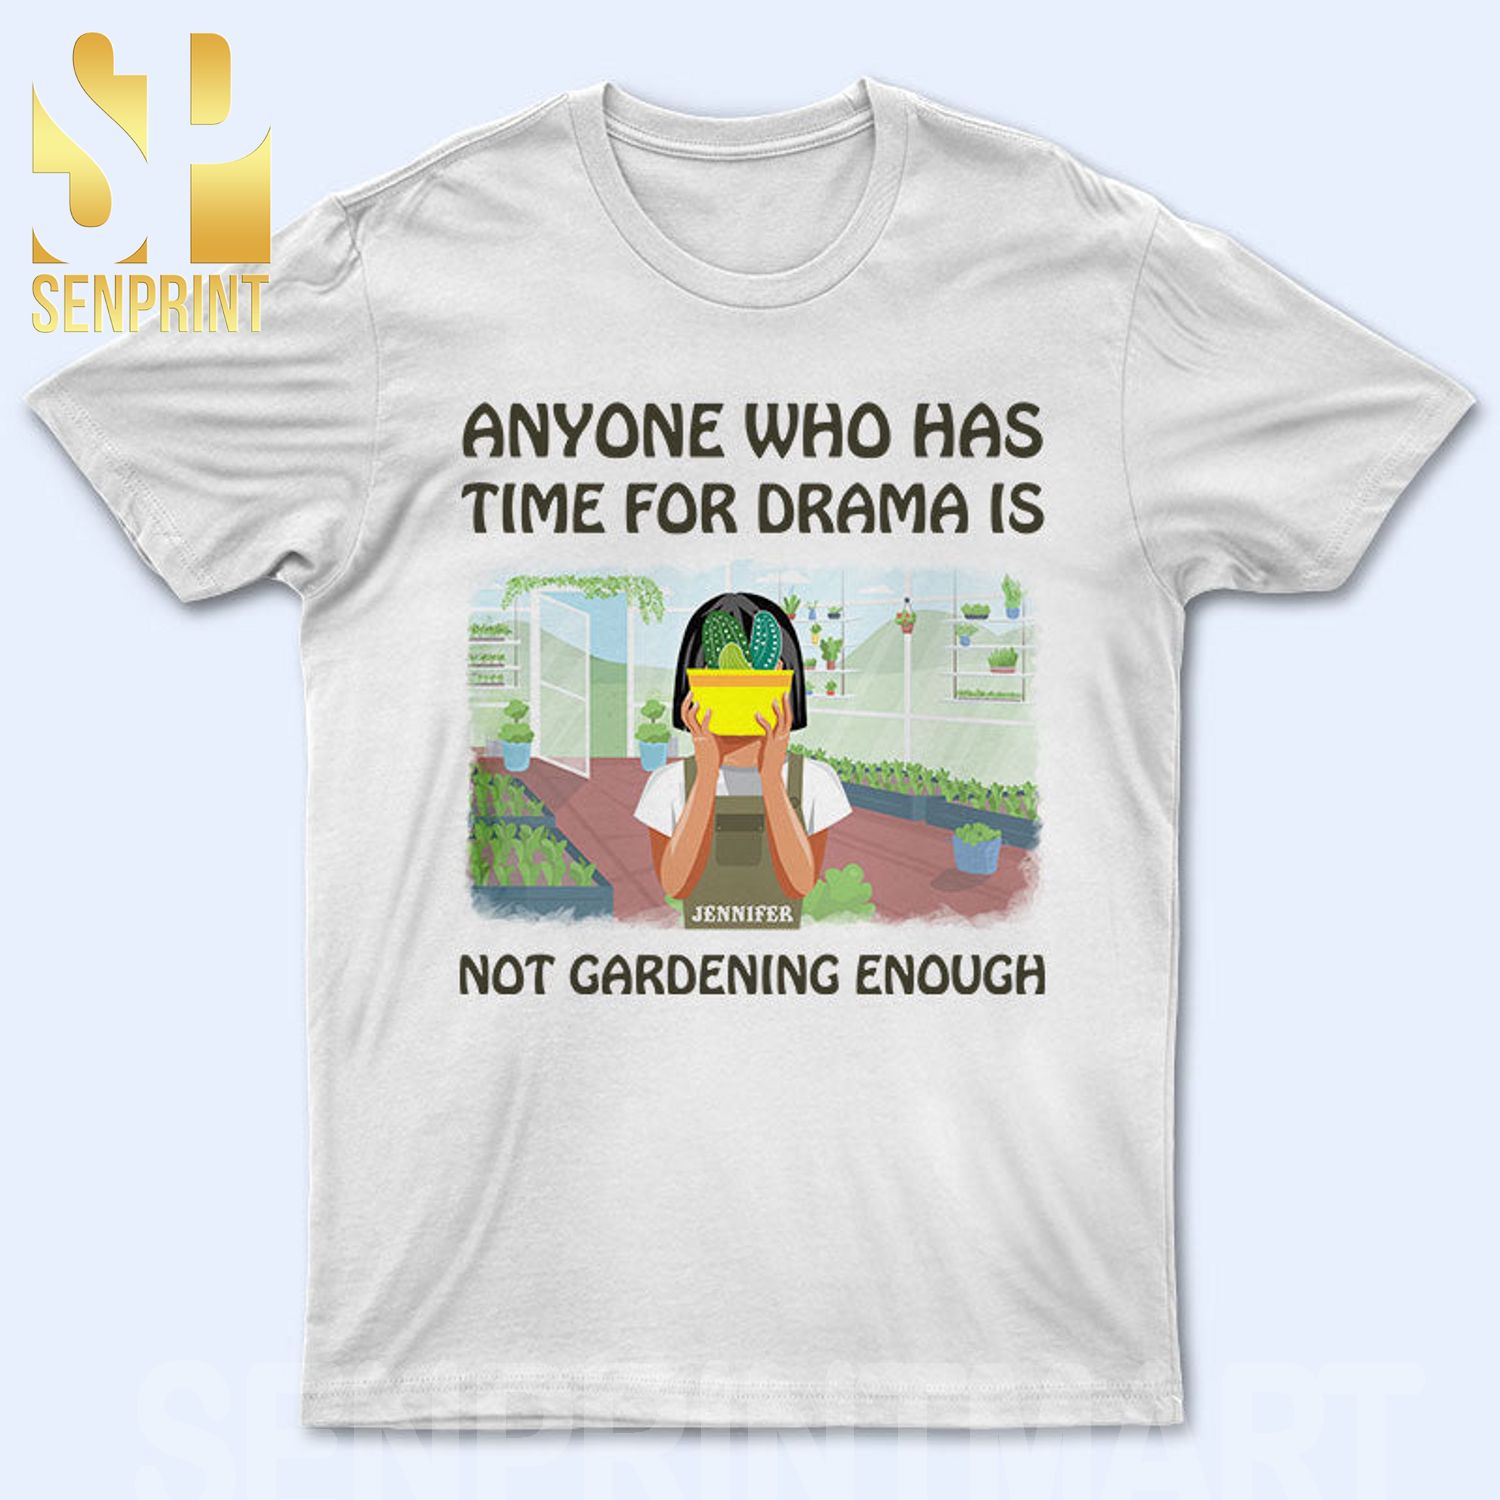 Not Gardening Enough – Personalized Custom Tshirt